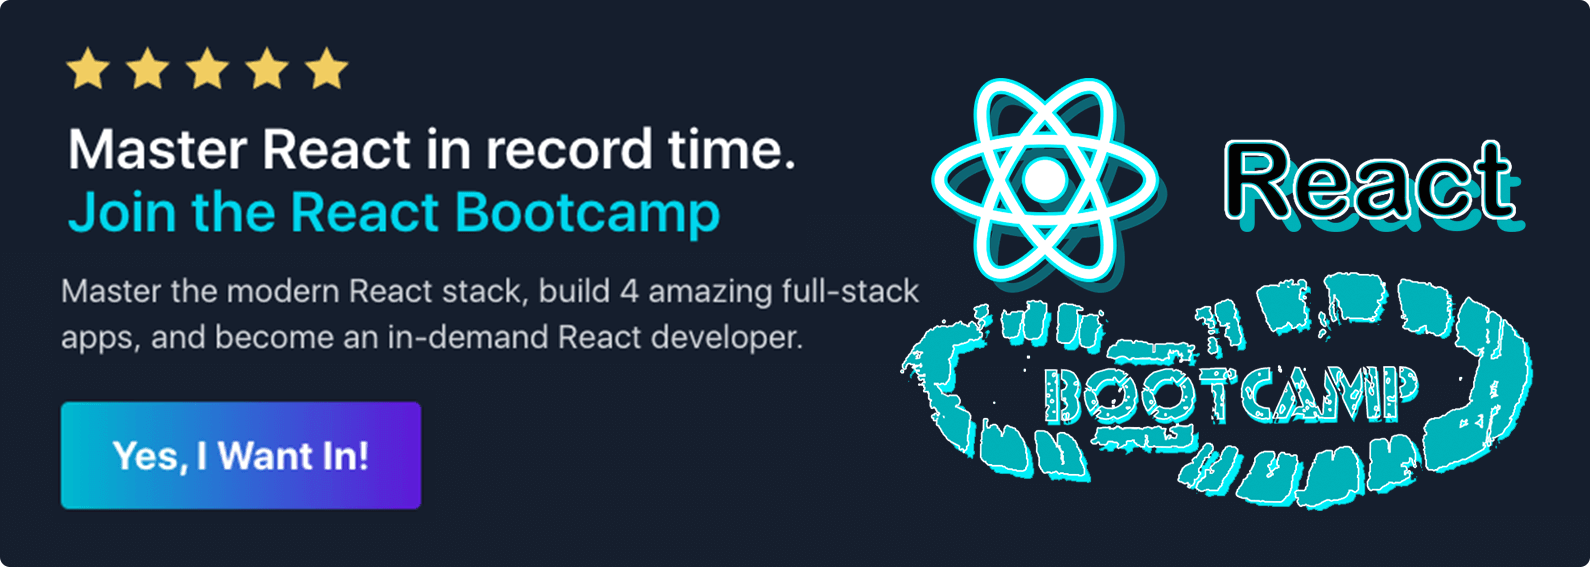 react-bootcamp-banner